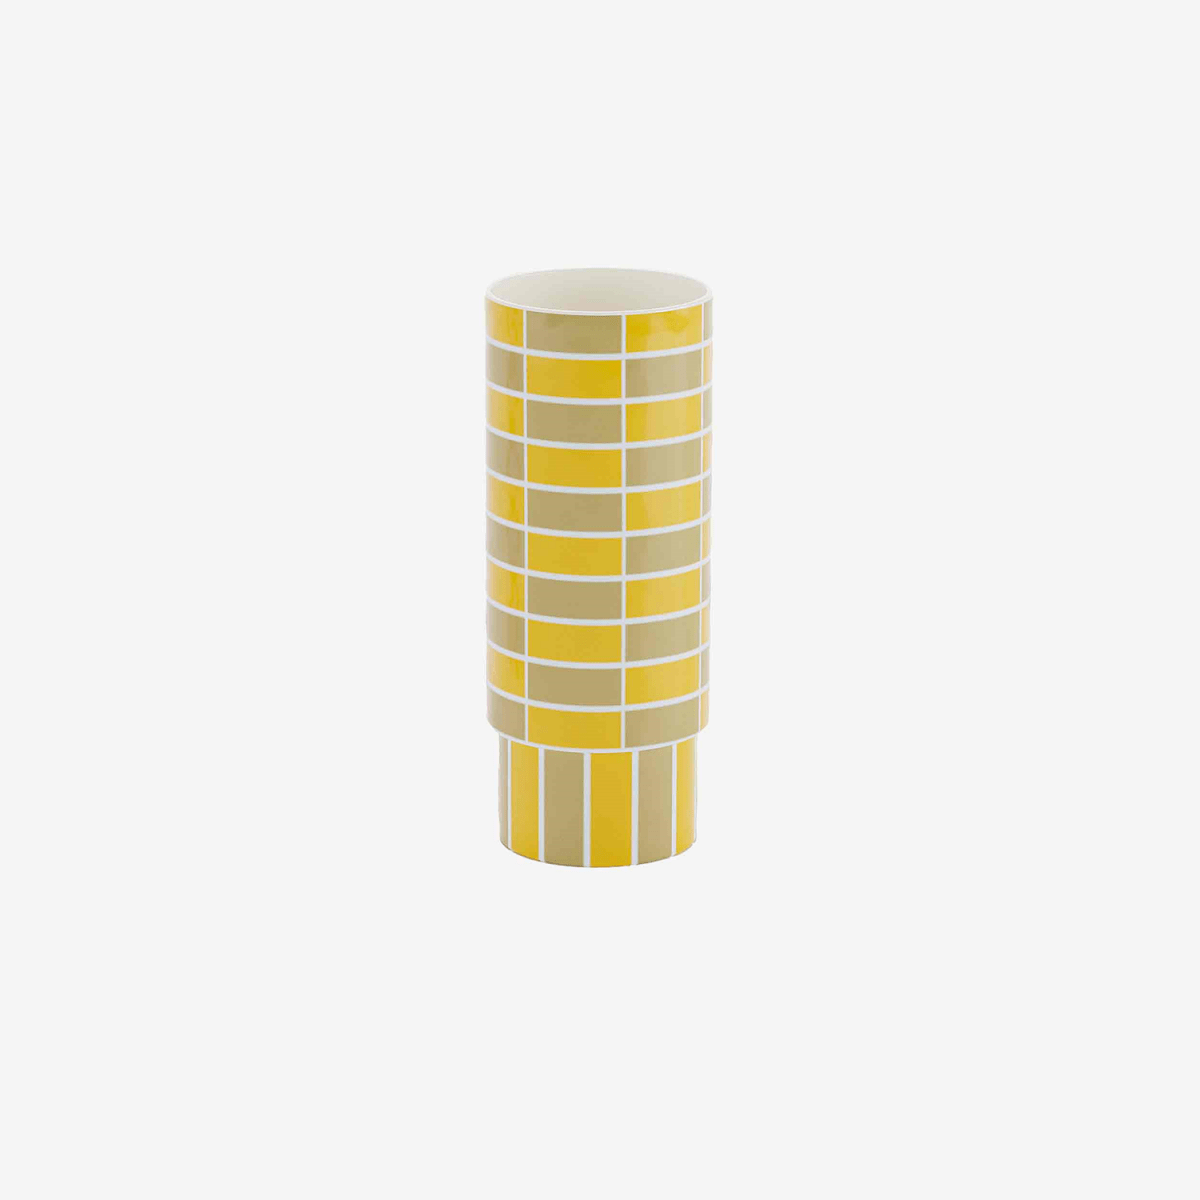 Grand vase tube à damier jaune et beige